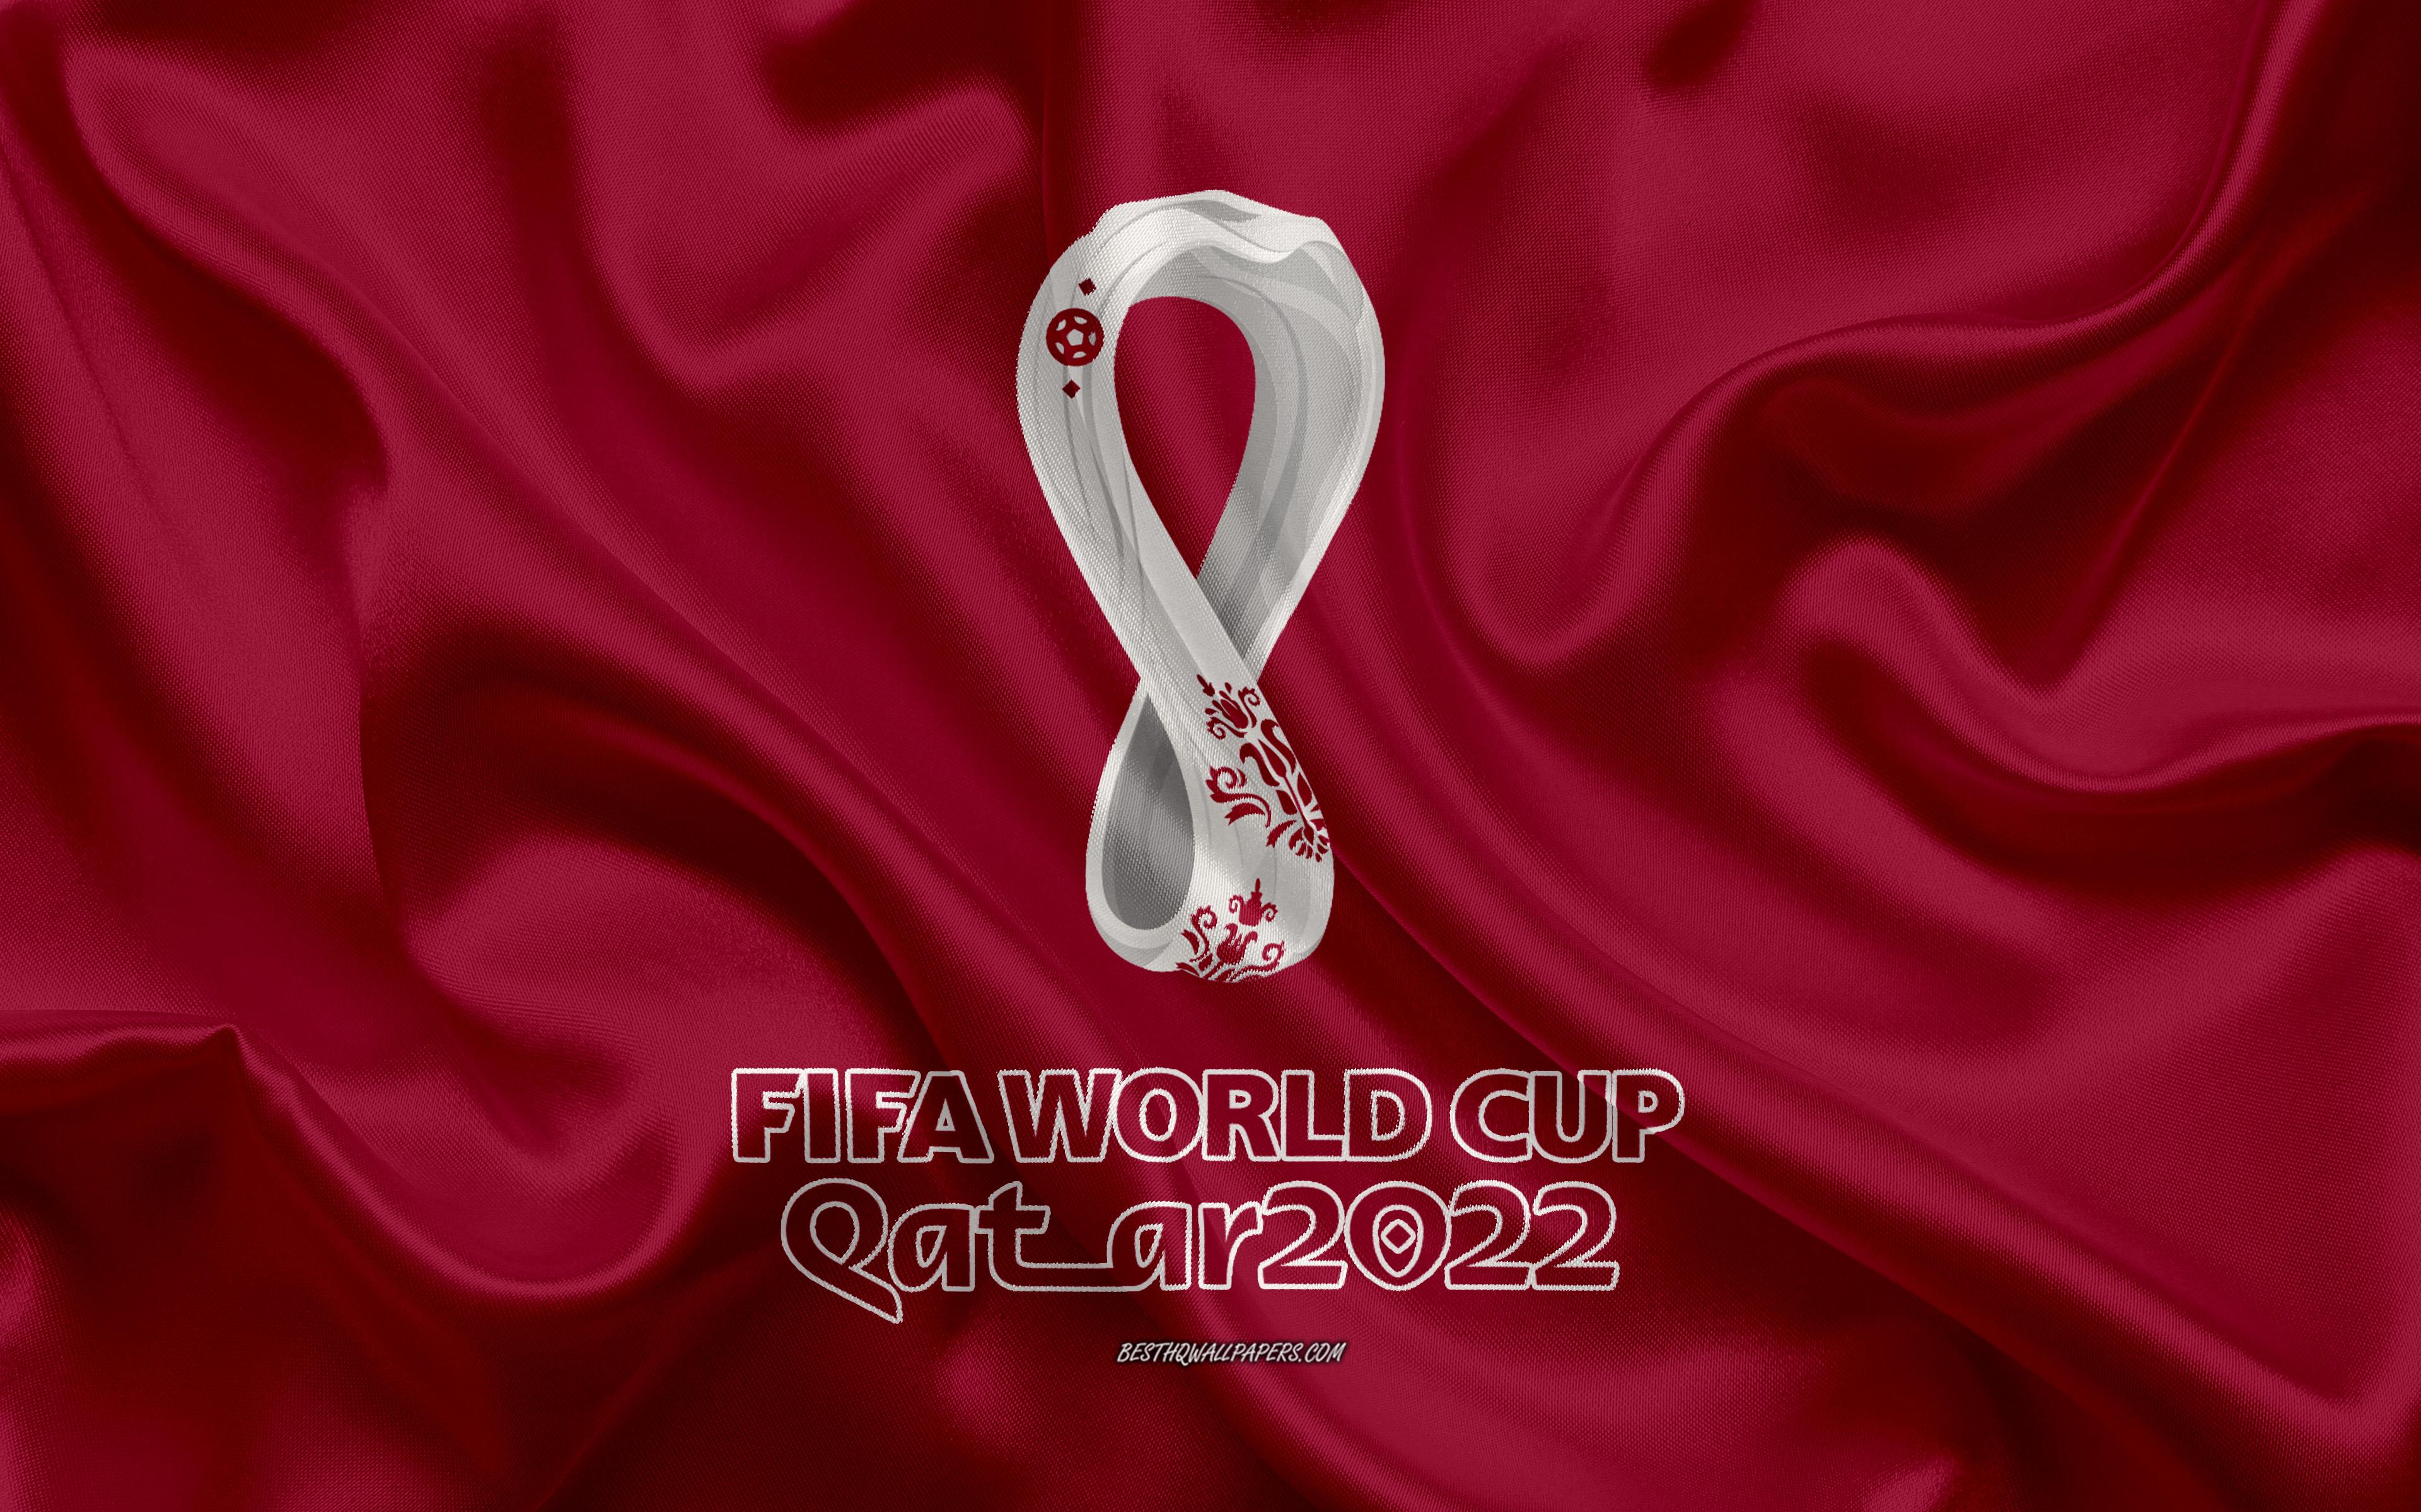 Download wallpapers 2022 FIFA World Cup 4k Qatar 2022 purple